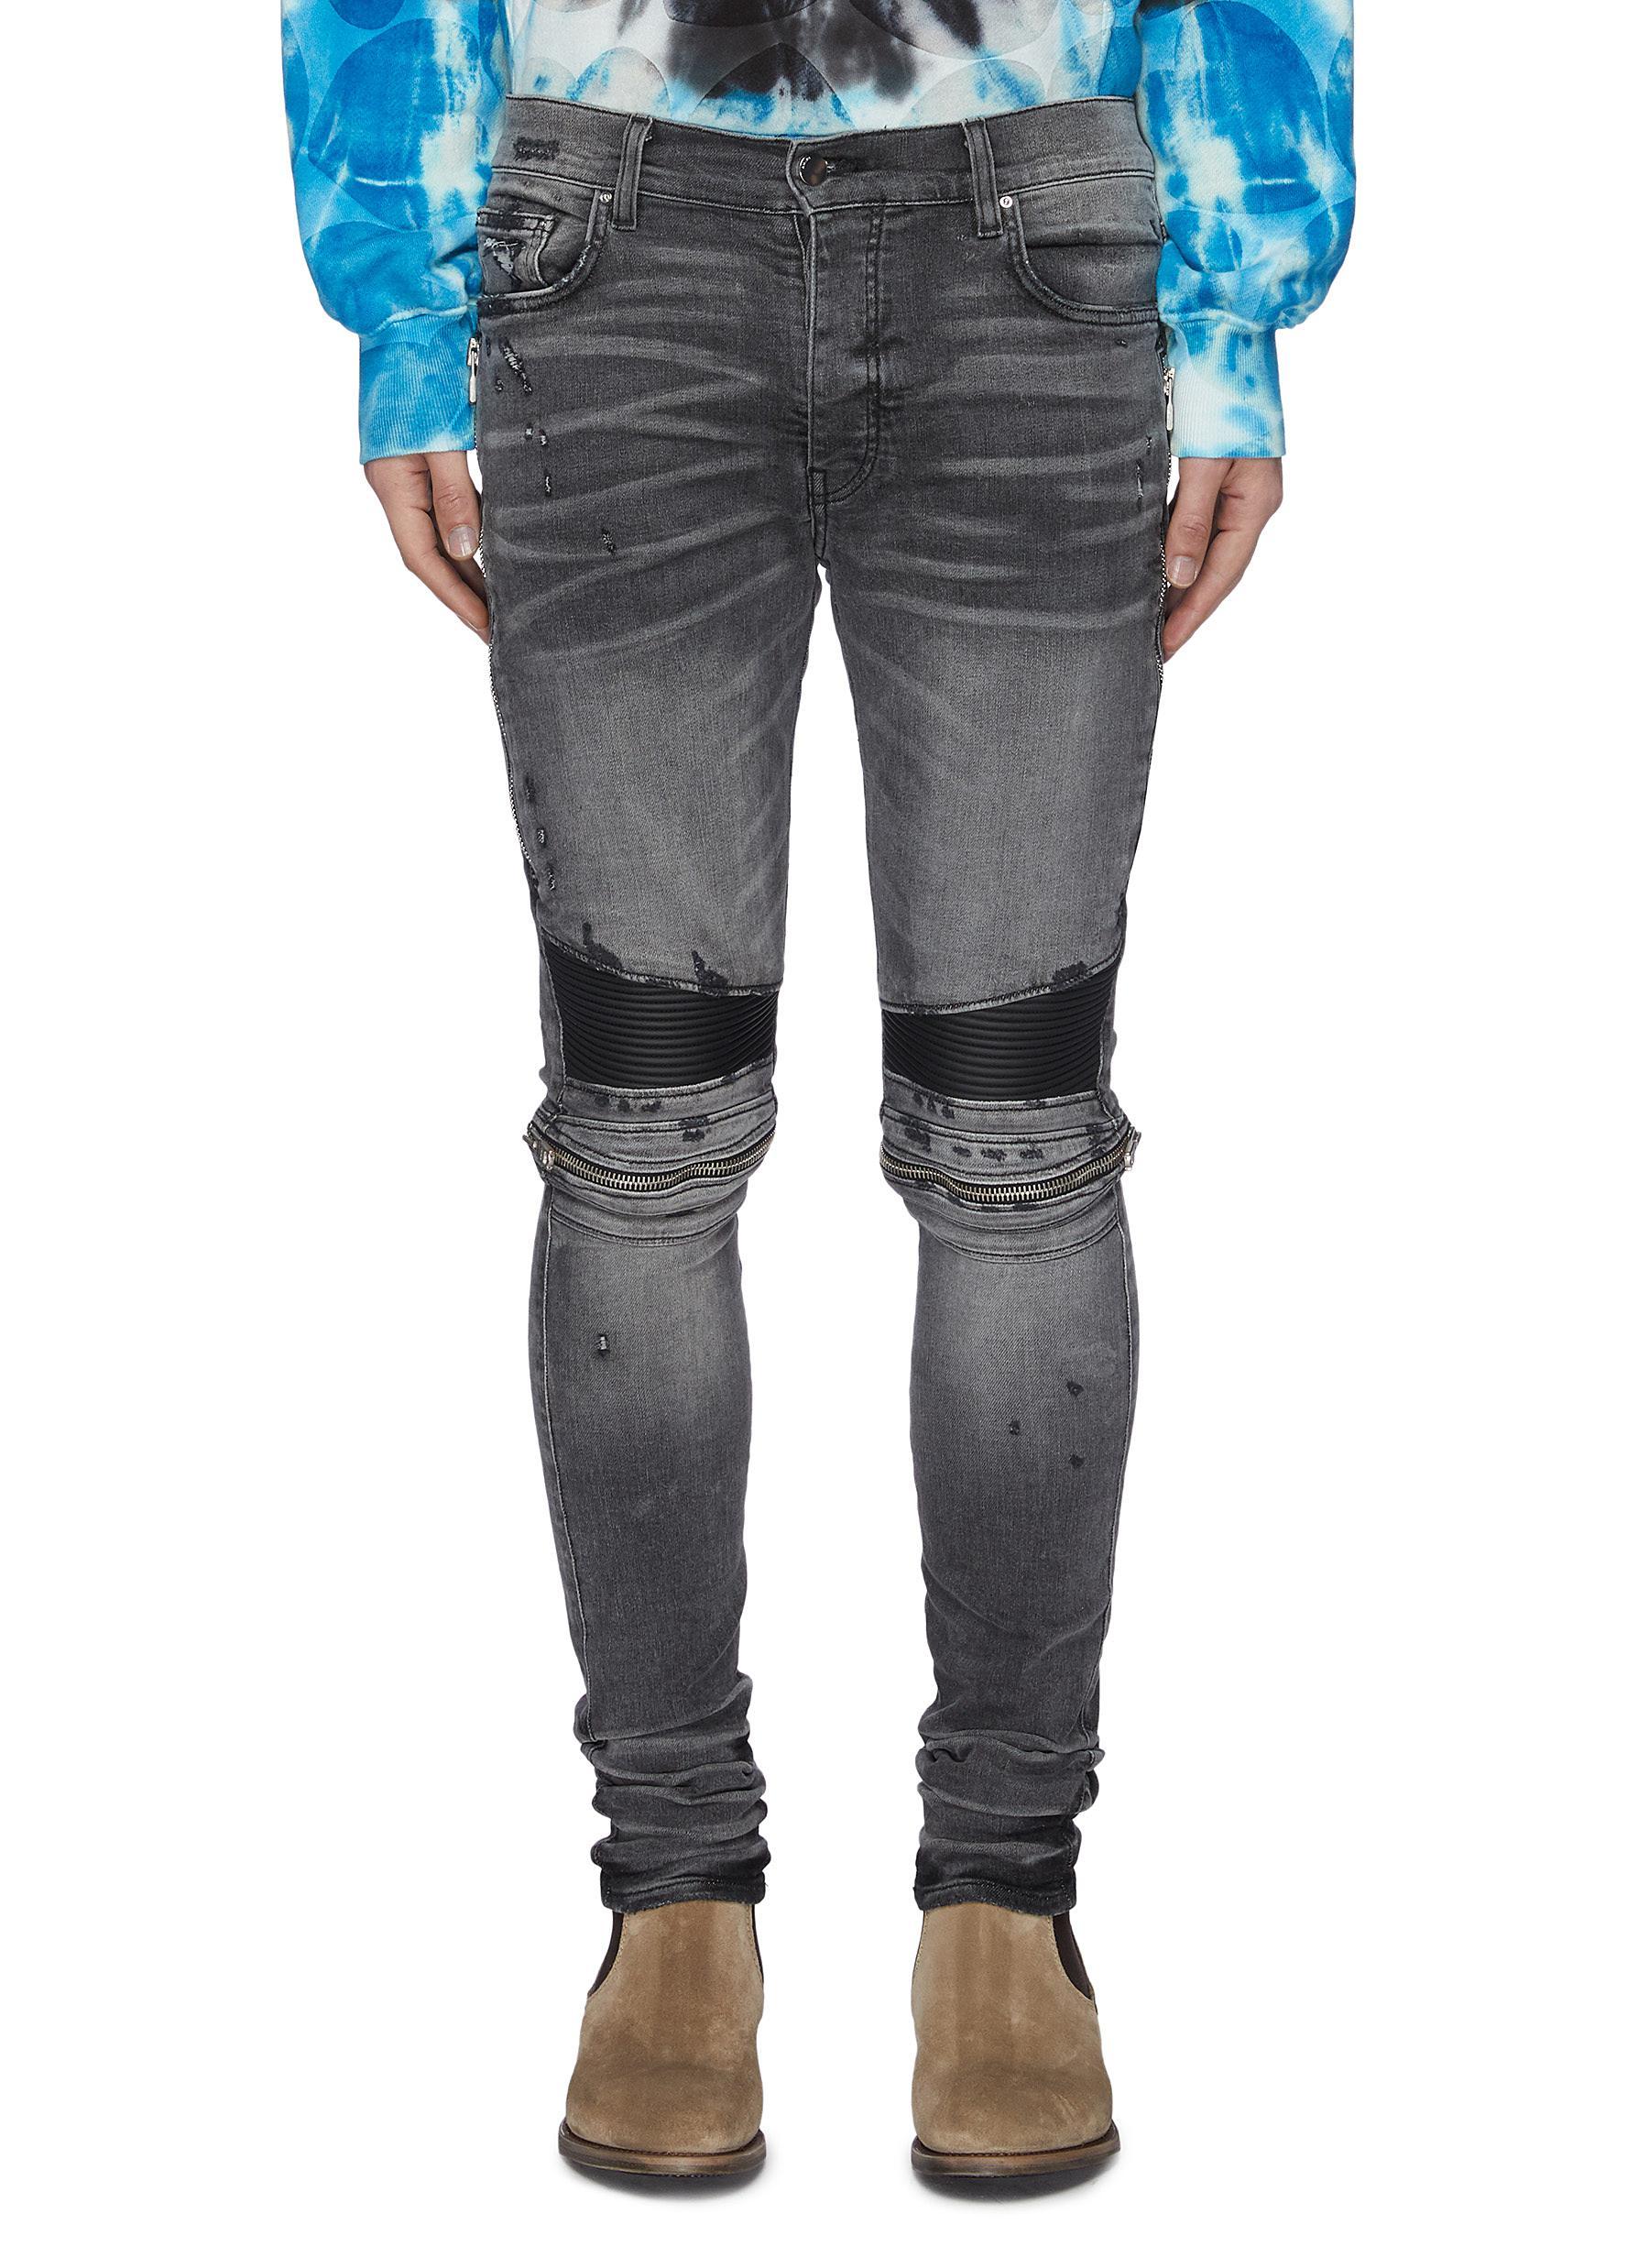 Amiri Denim 'mx2' Zip Detail Skinny Jeans in Grey (Gray) for Men - Lyst